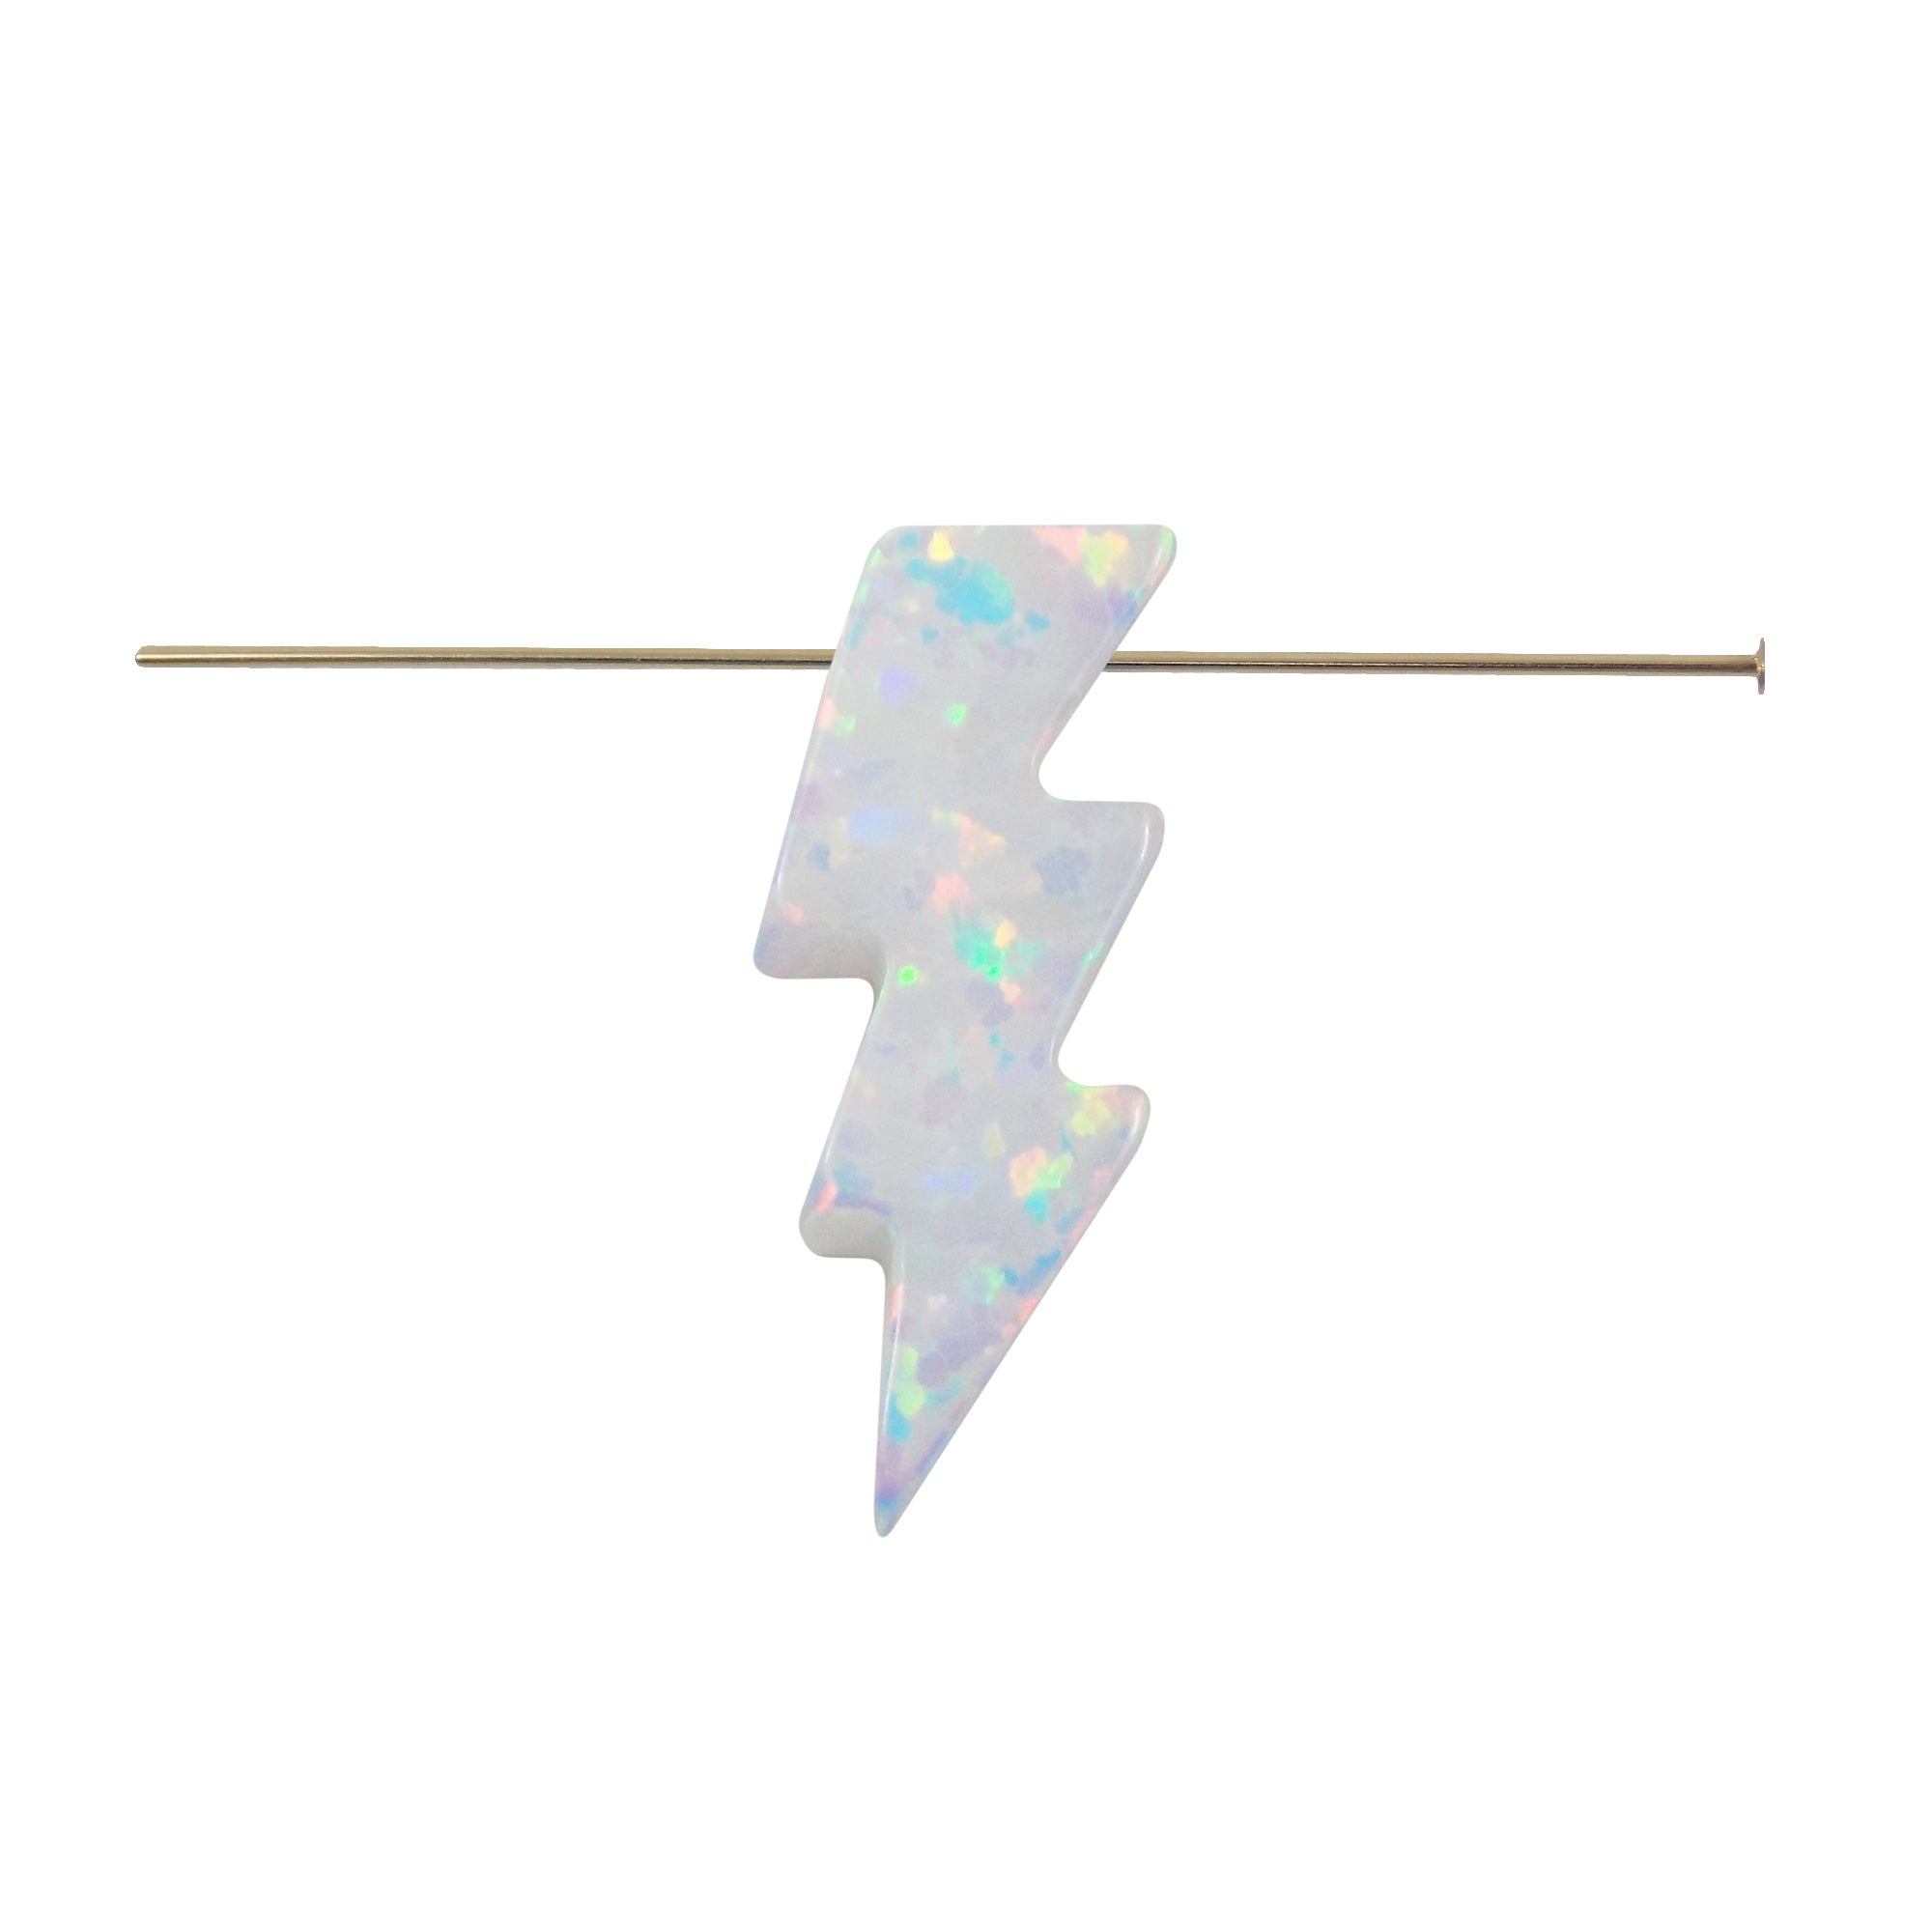 Opal Lightning Bolt Pendant 5.5mmx12.5mm, Tiny Thunderbolt Flash, White Opal Thunder Charm, Authentic Lab-created Opal Wholesale, USA Seller